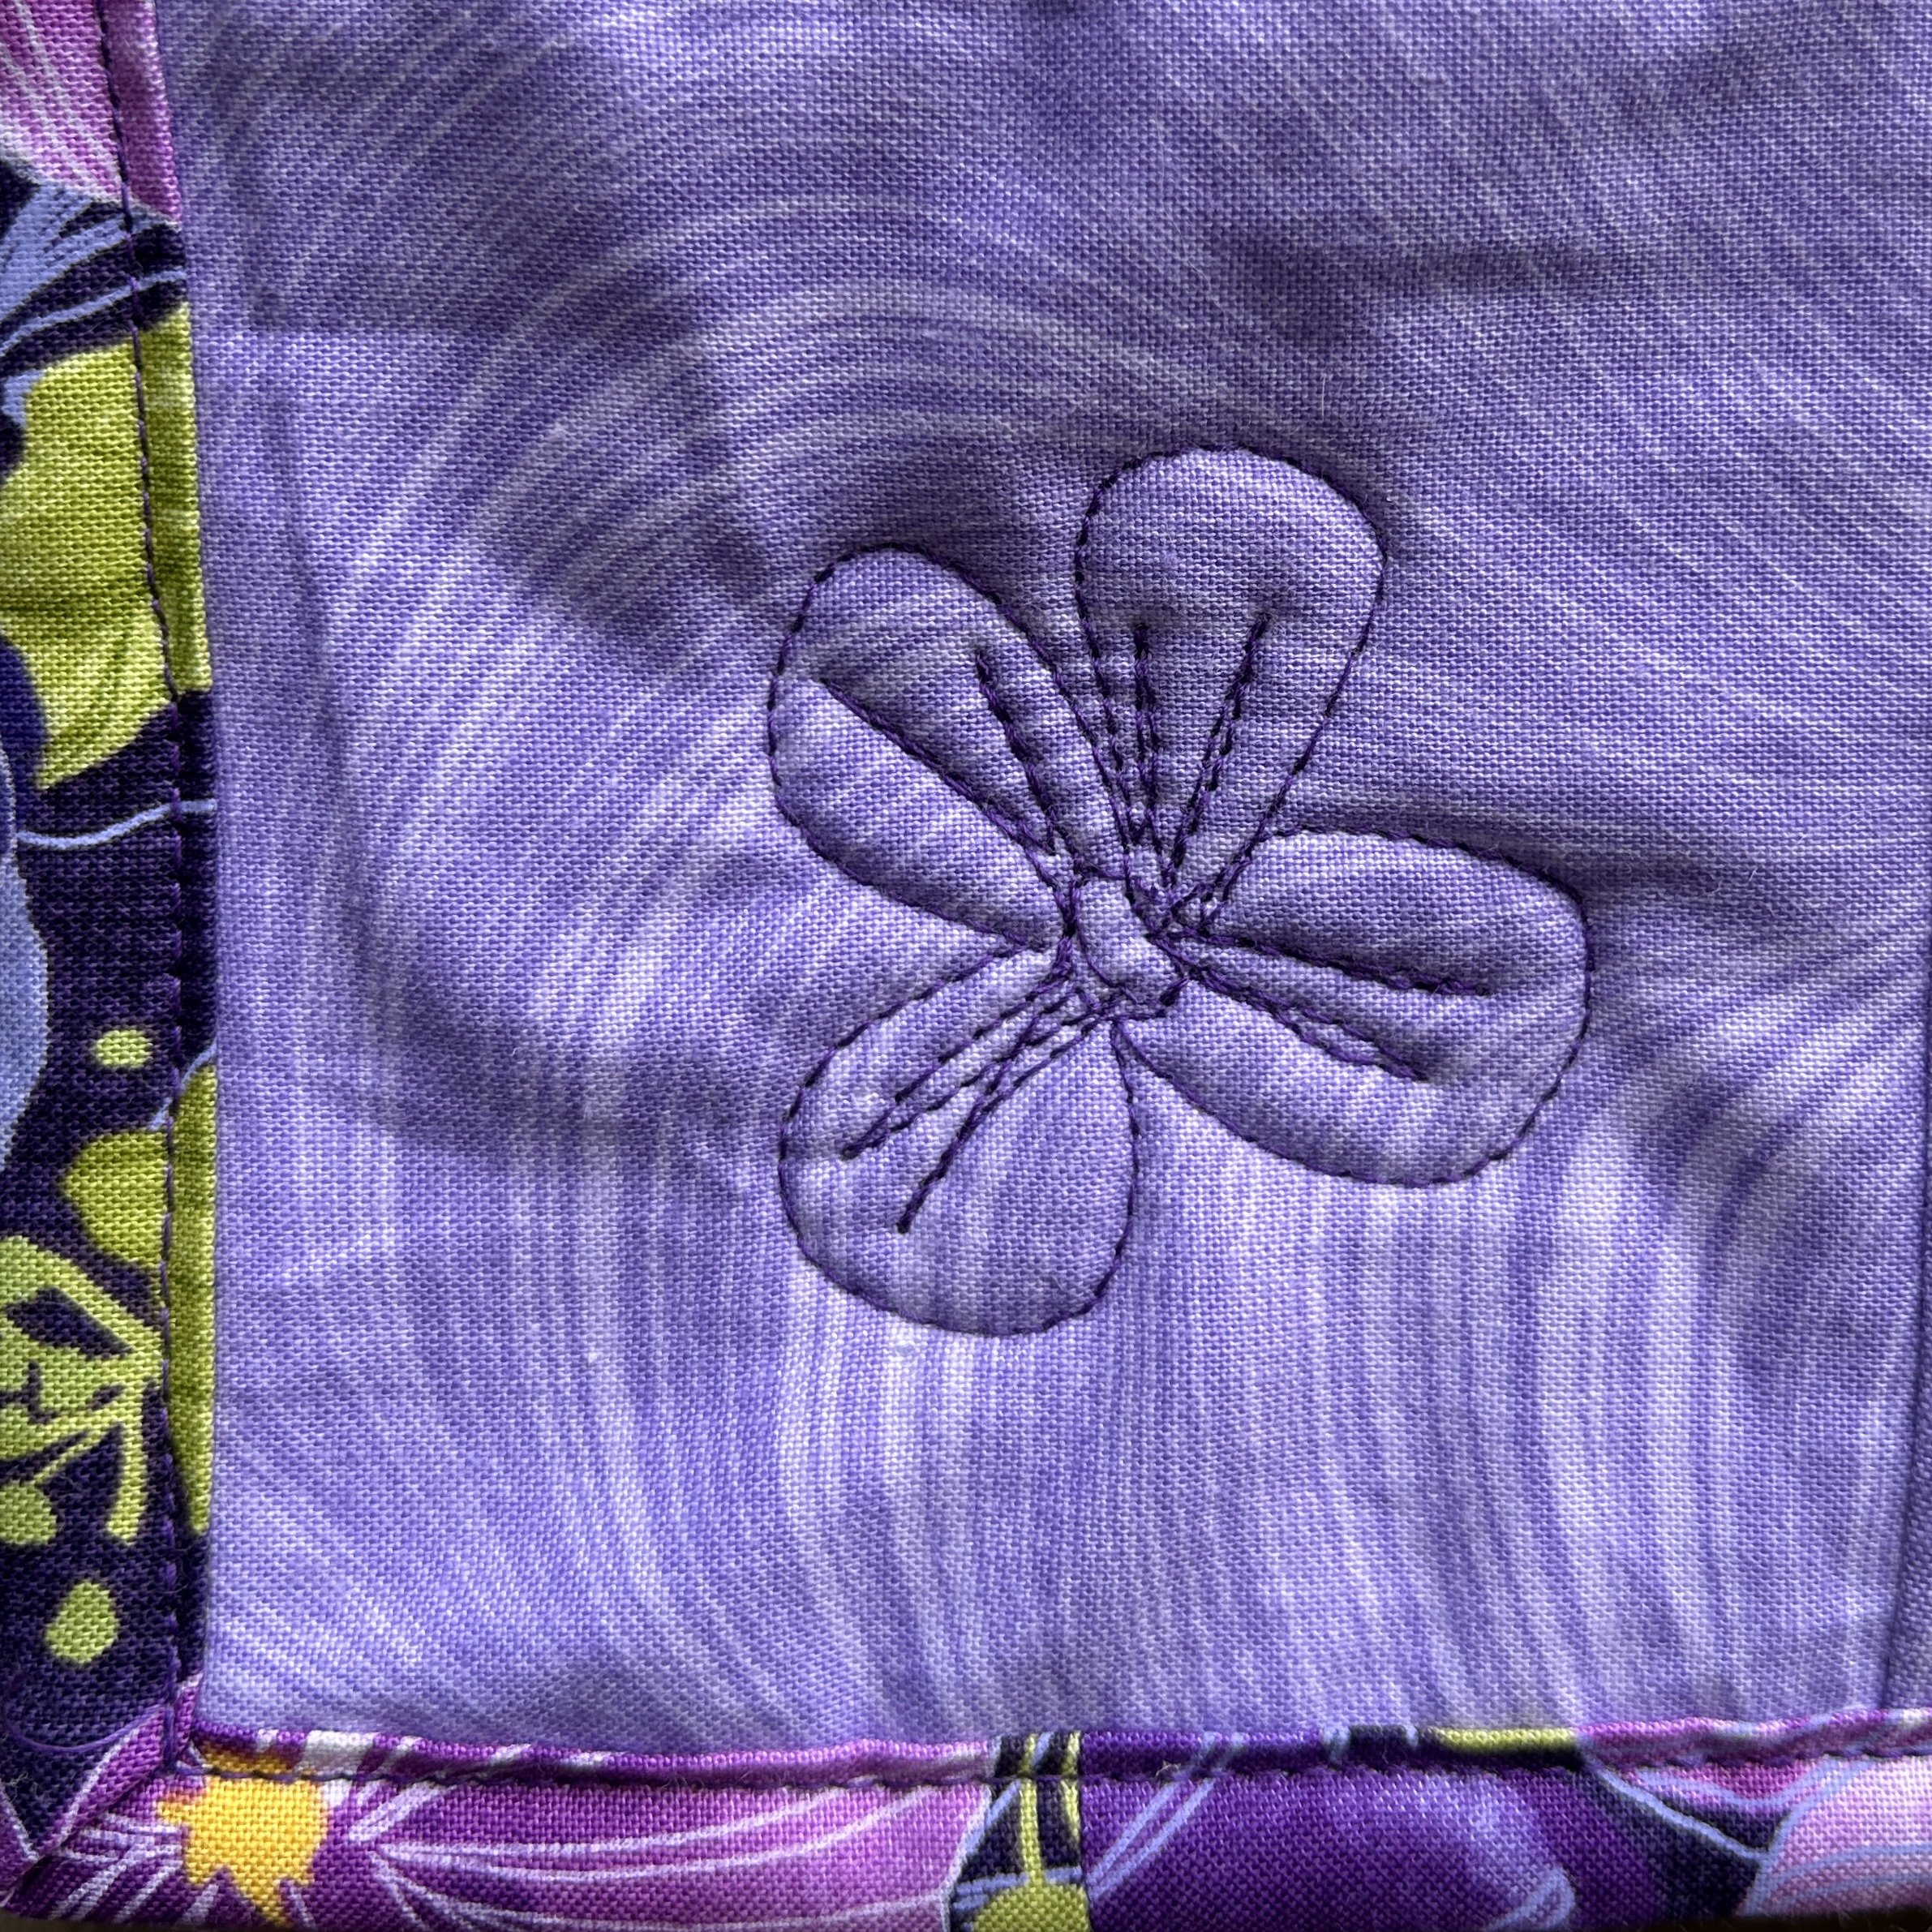 Microbrush - Purple Daisies Quilting